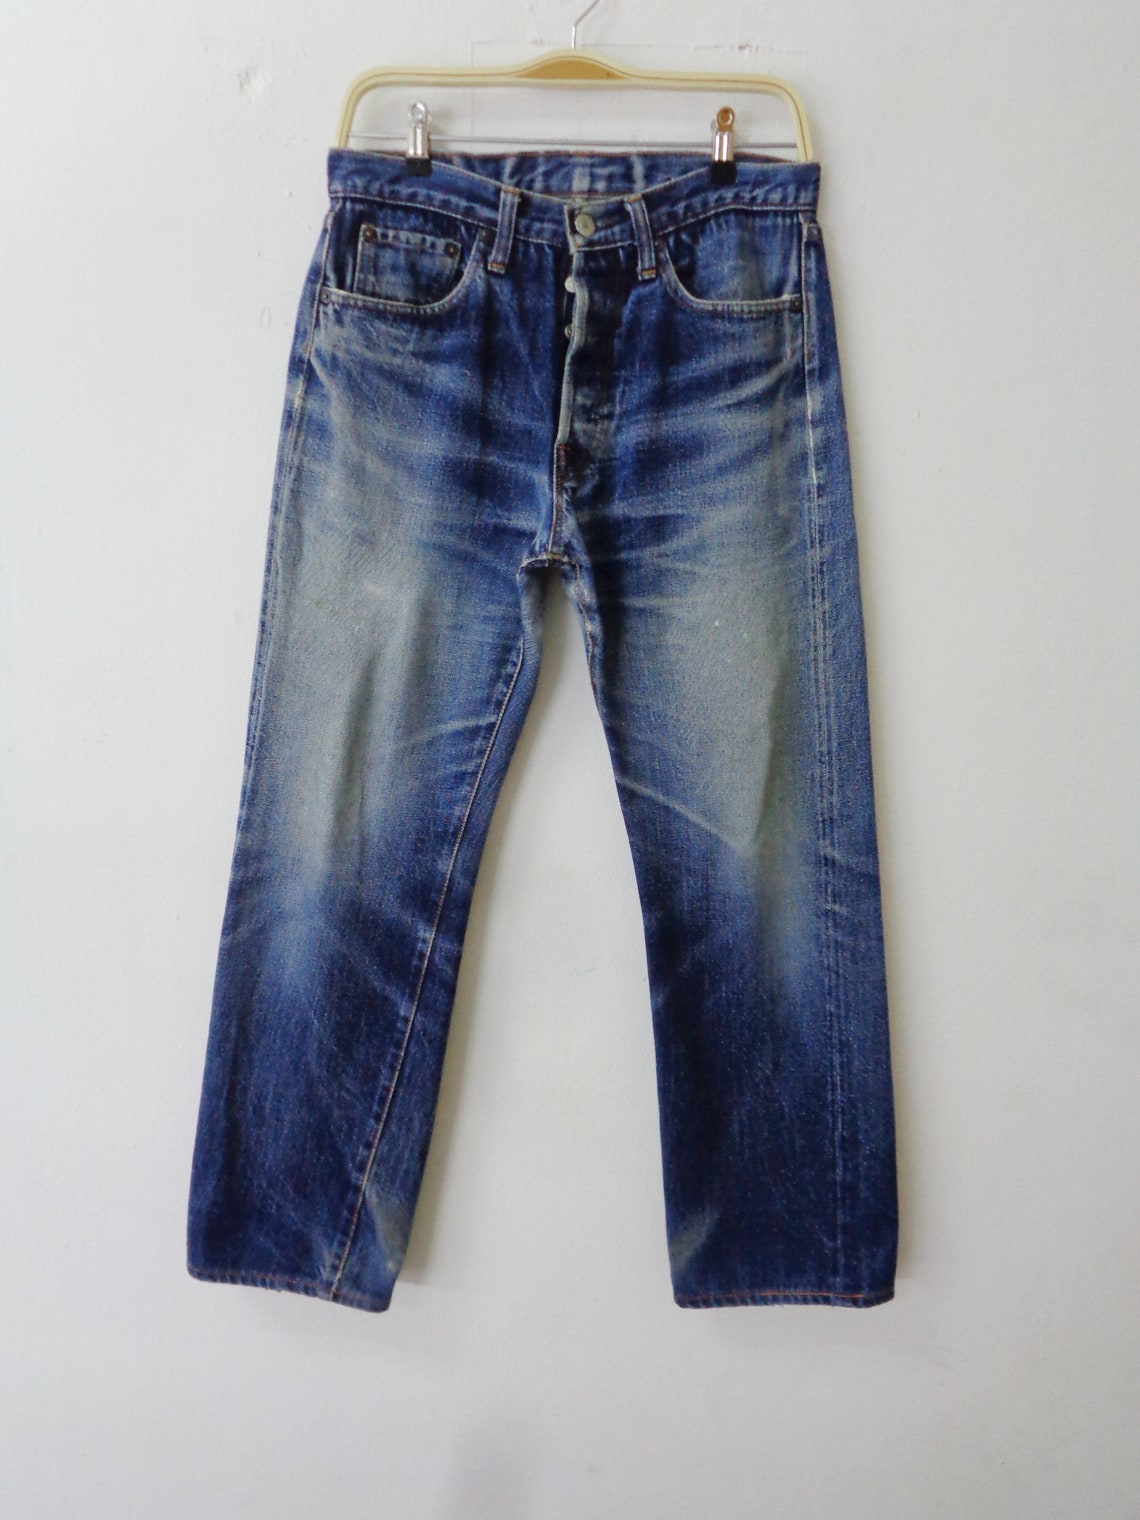 Denime Jeans Vintage 90s Distressed Denime Made In Japan | Etsy